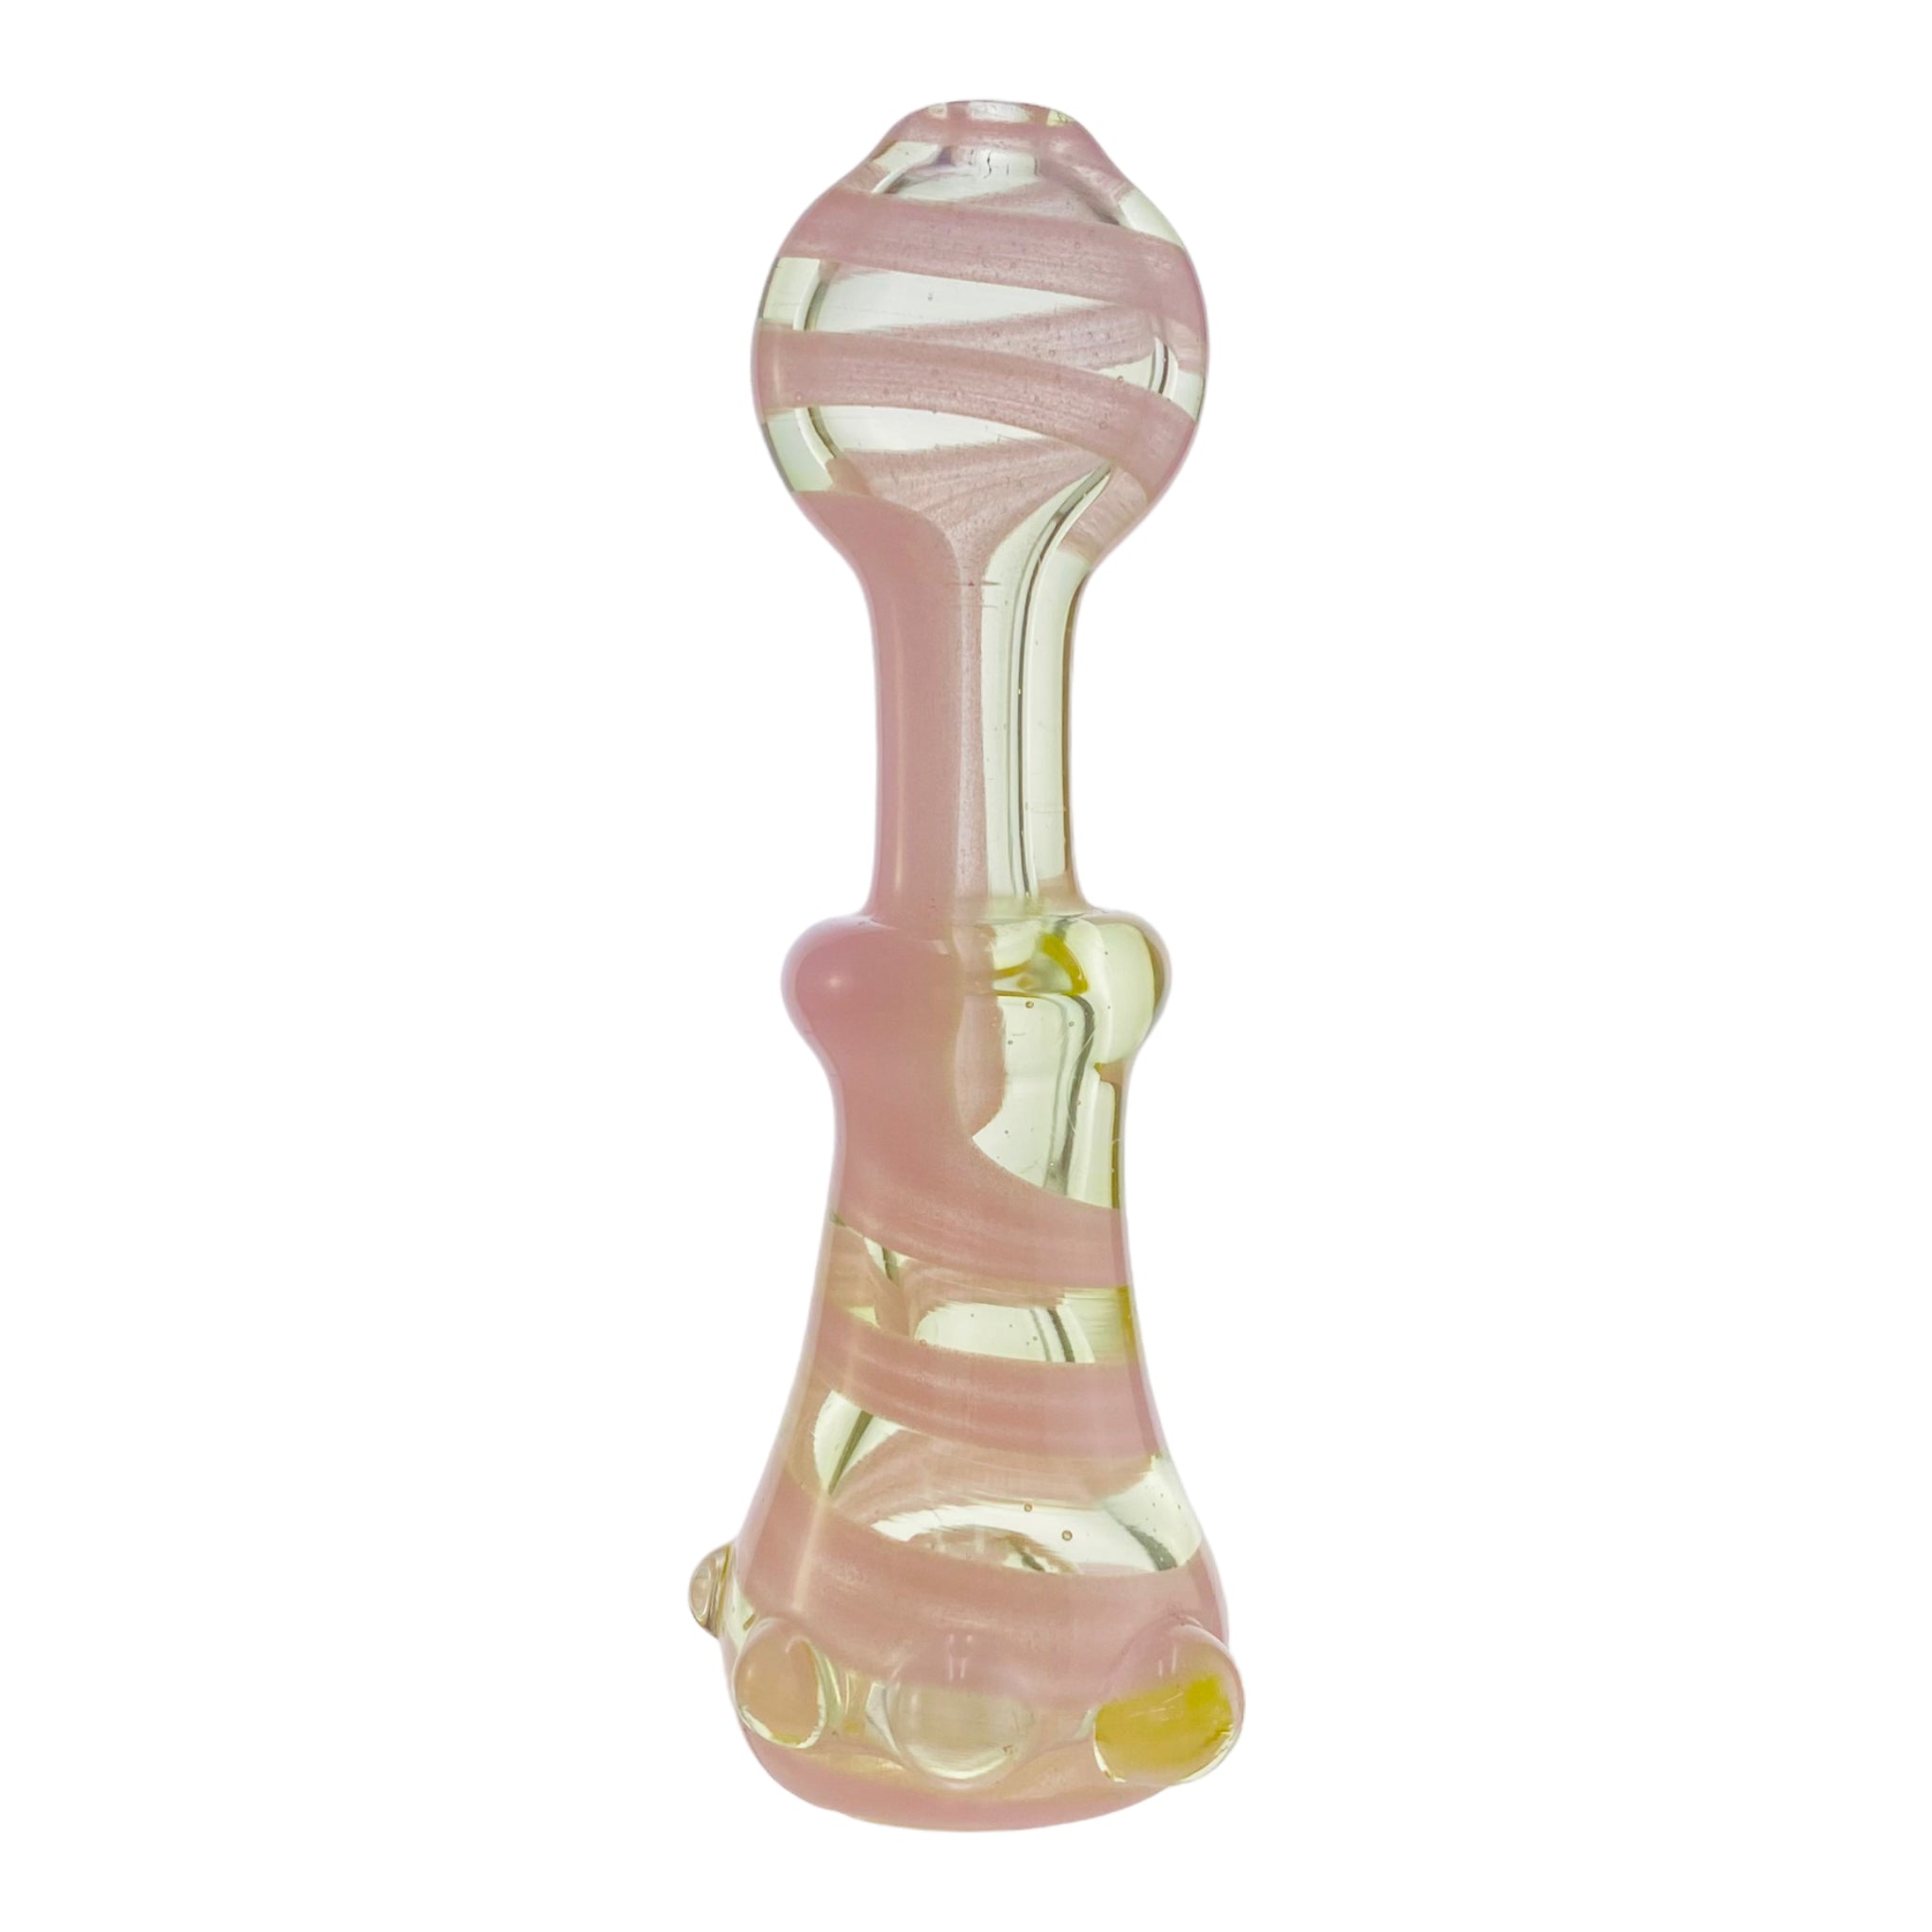 Glass Chillum Pipe - Pink Twirl Over Light Green Glass